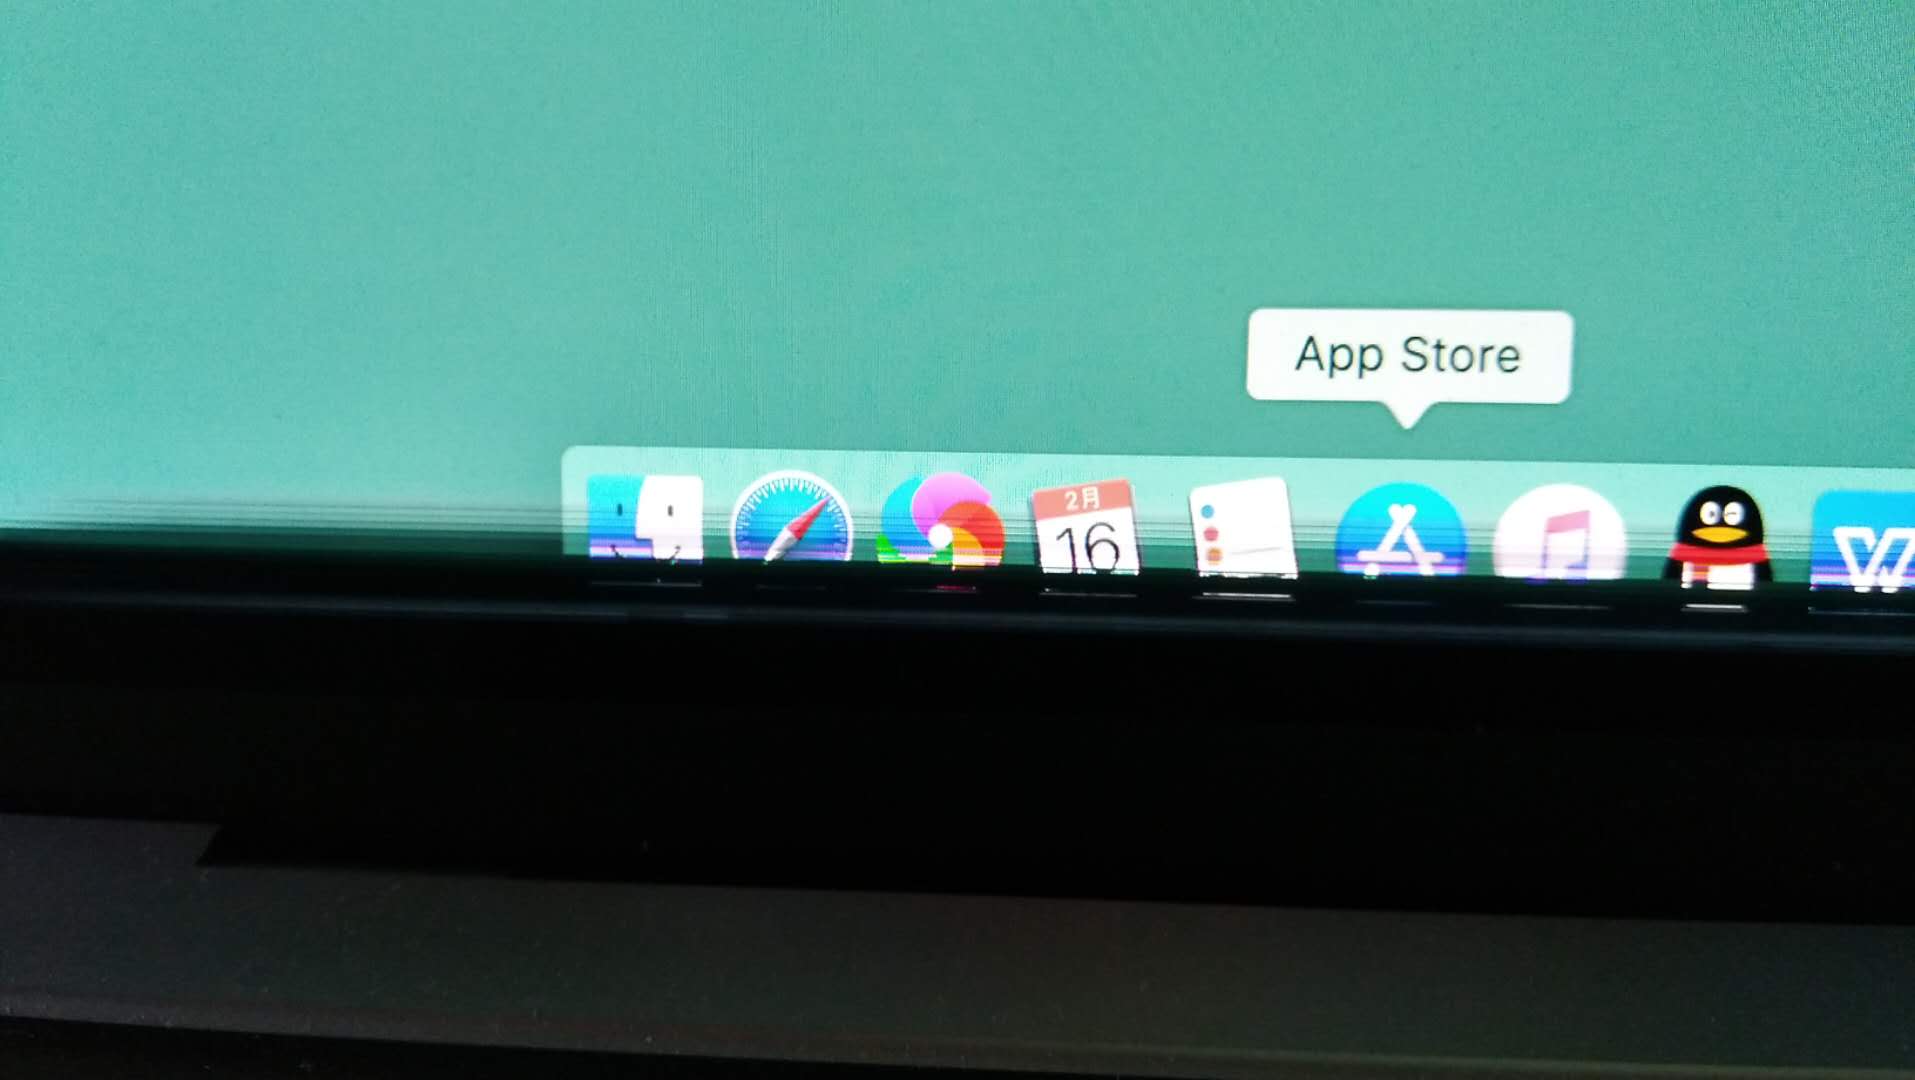 Macbook Pro 18款带bar屏幕 Apple 社区